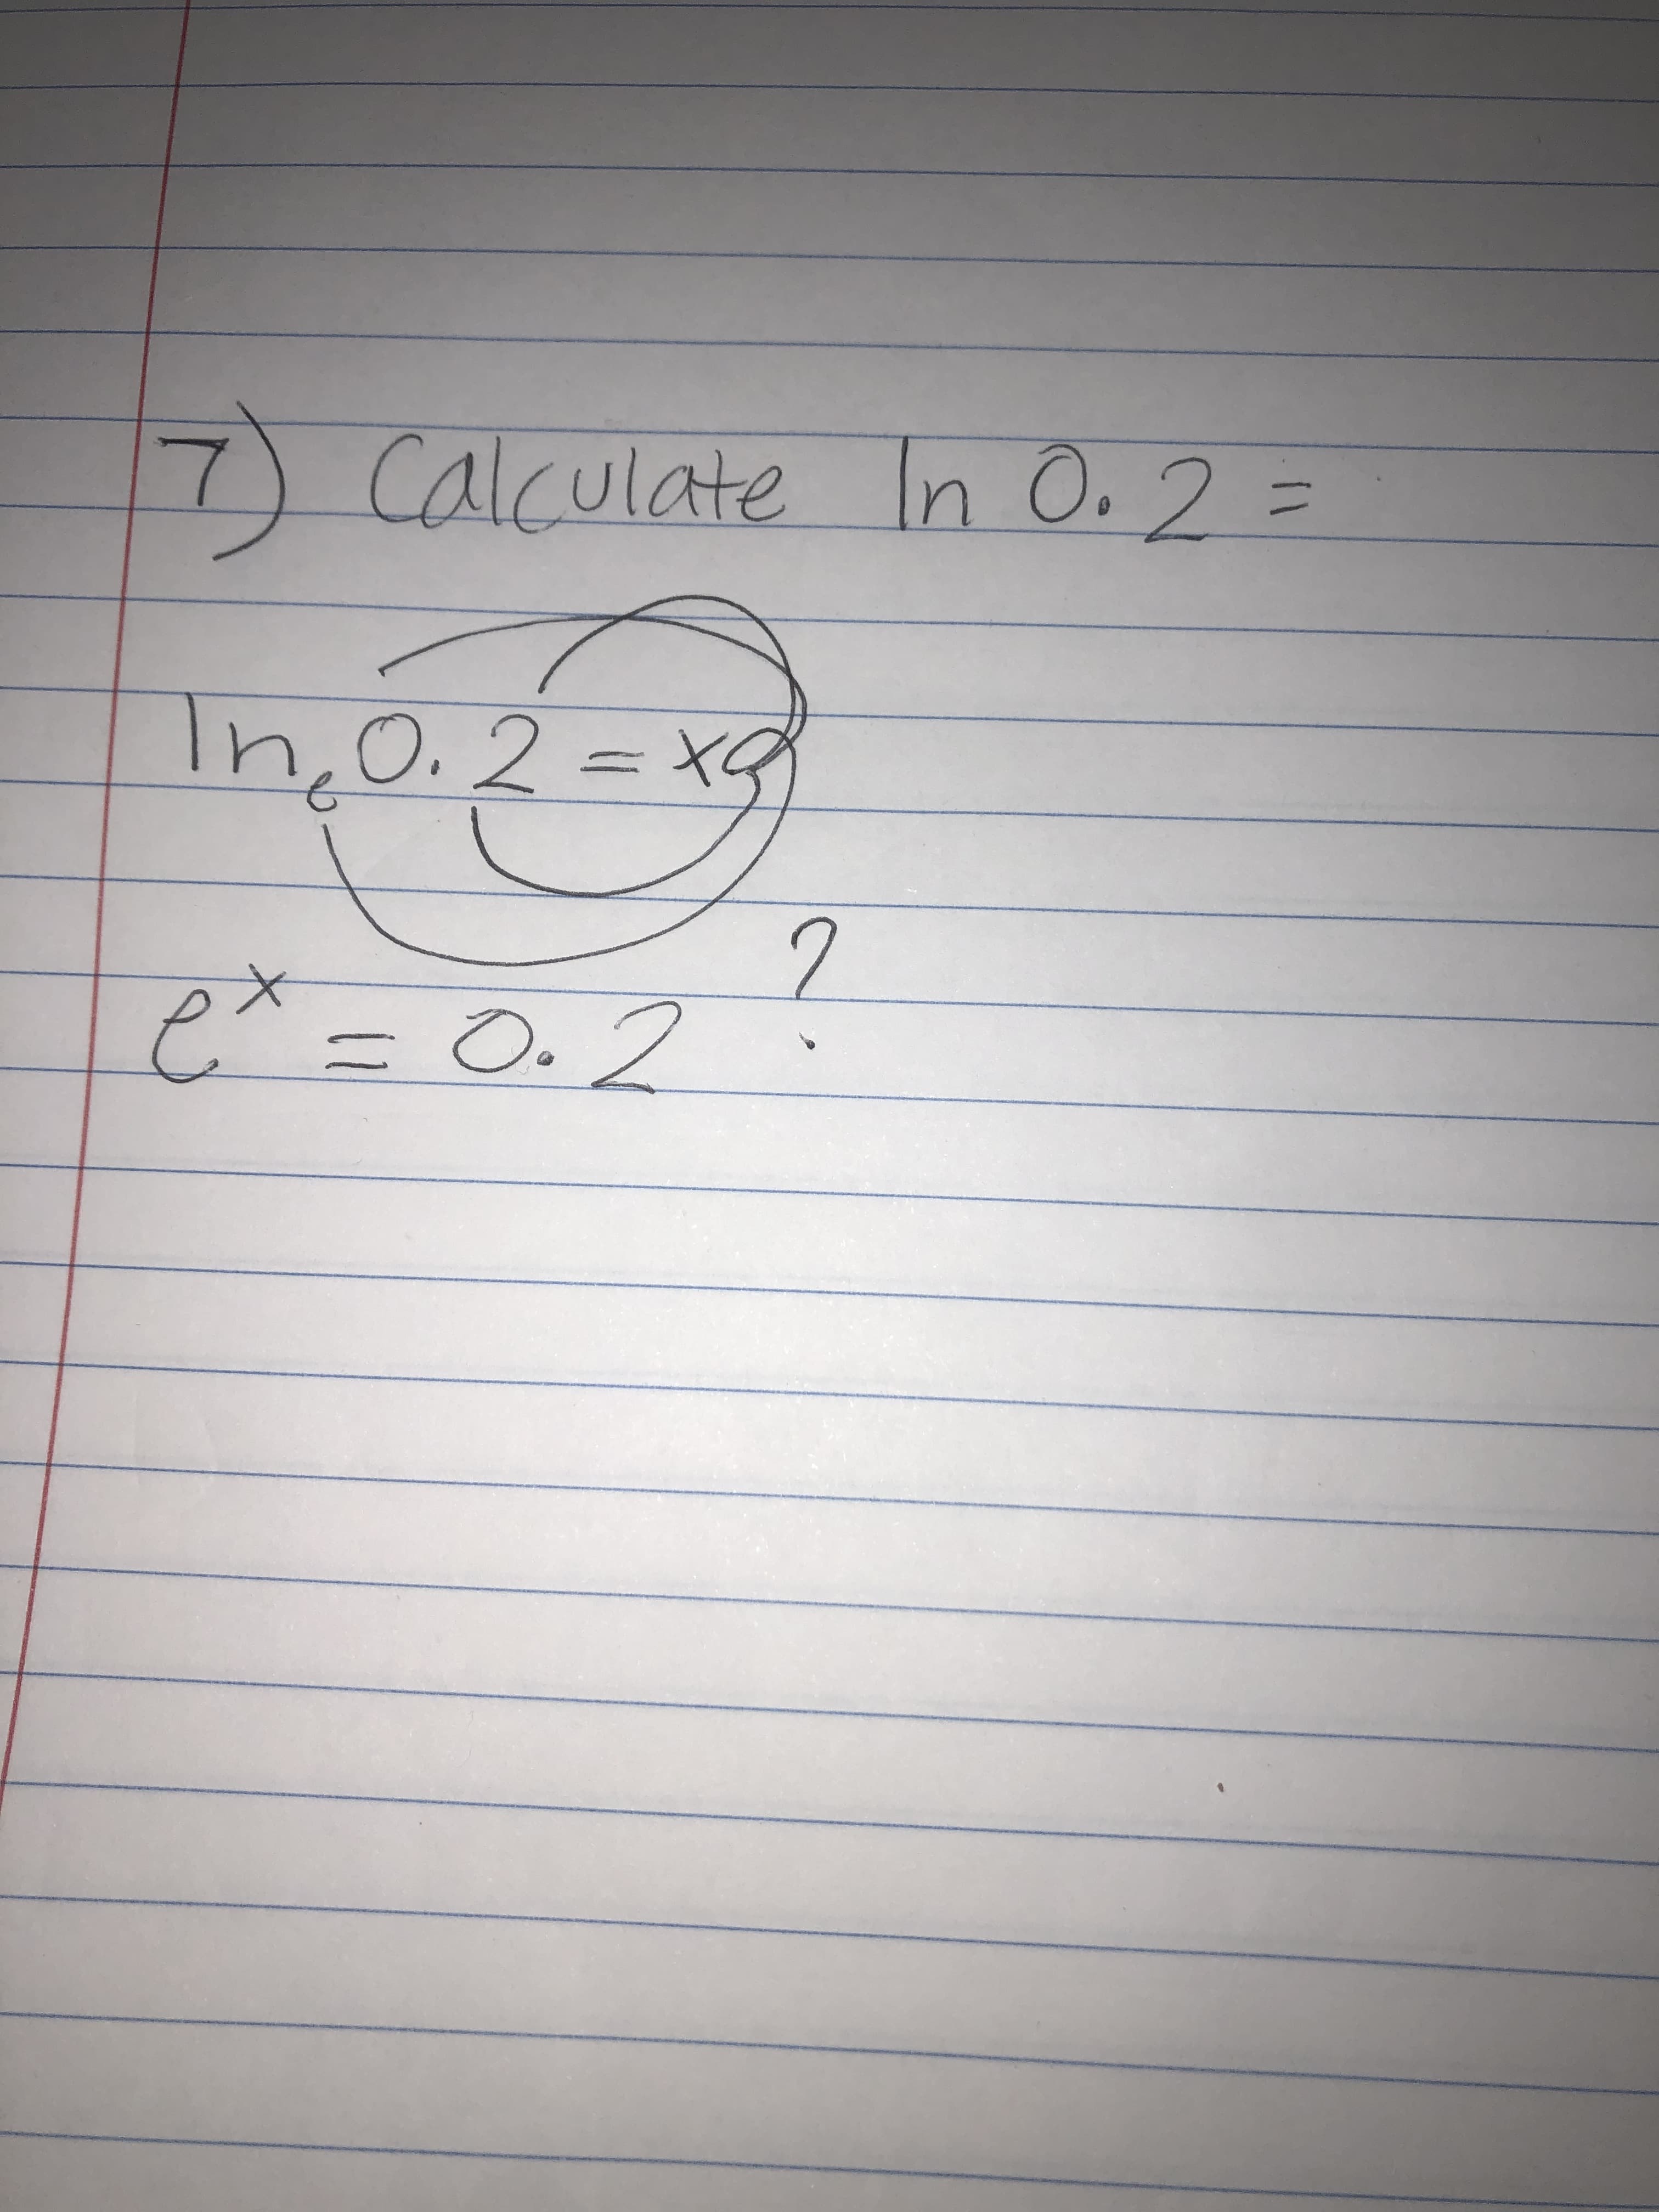 7) Calculate In Oo 2:
